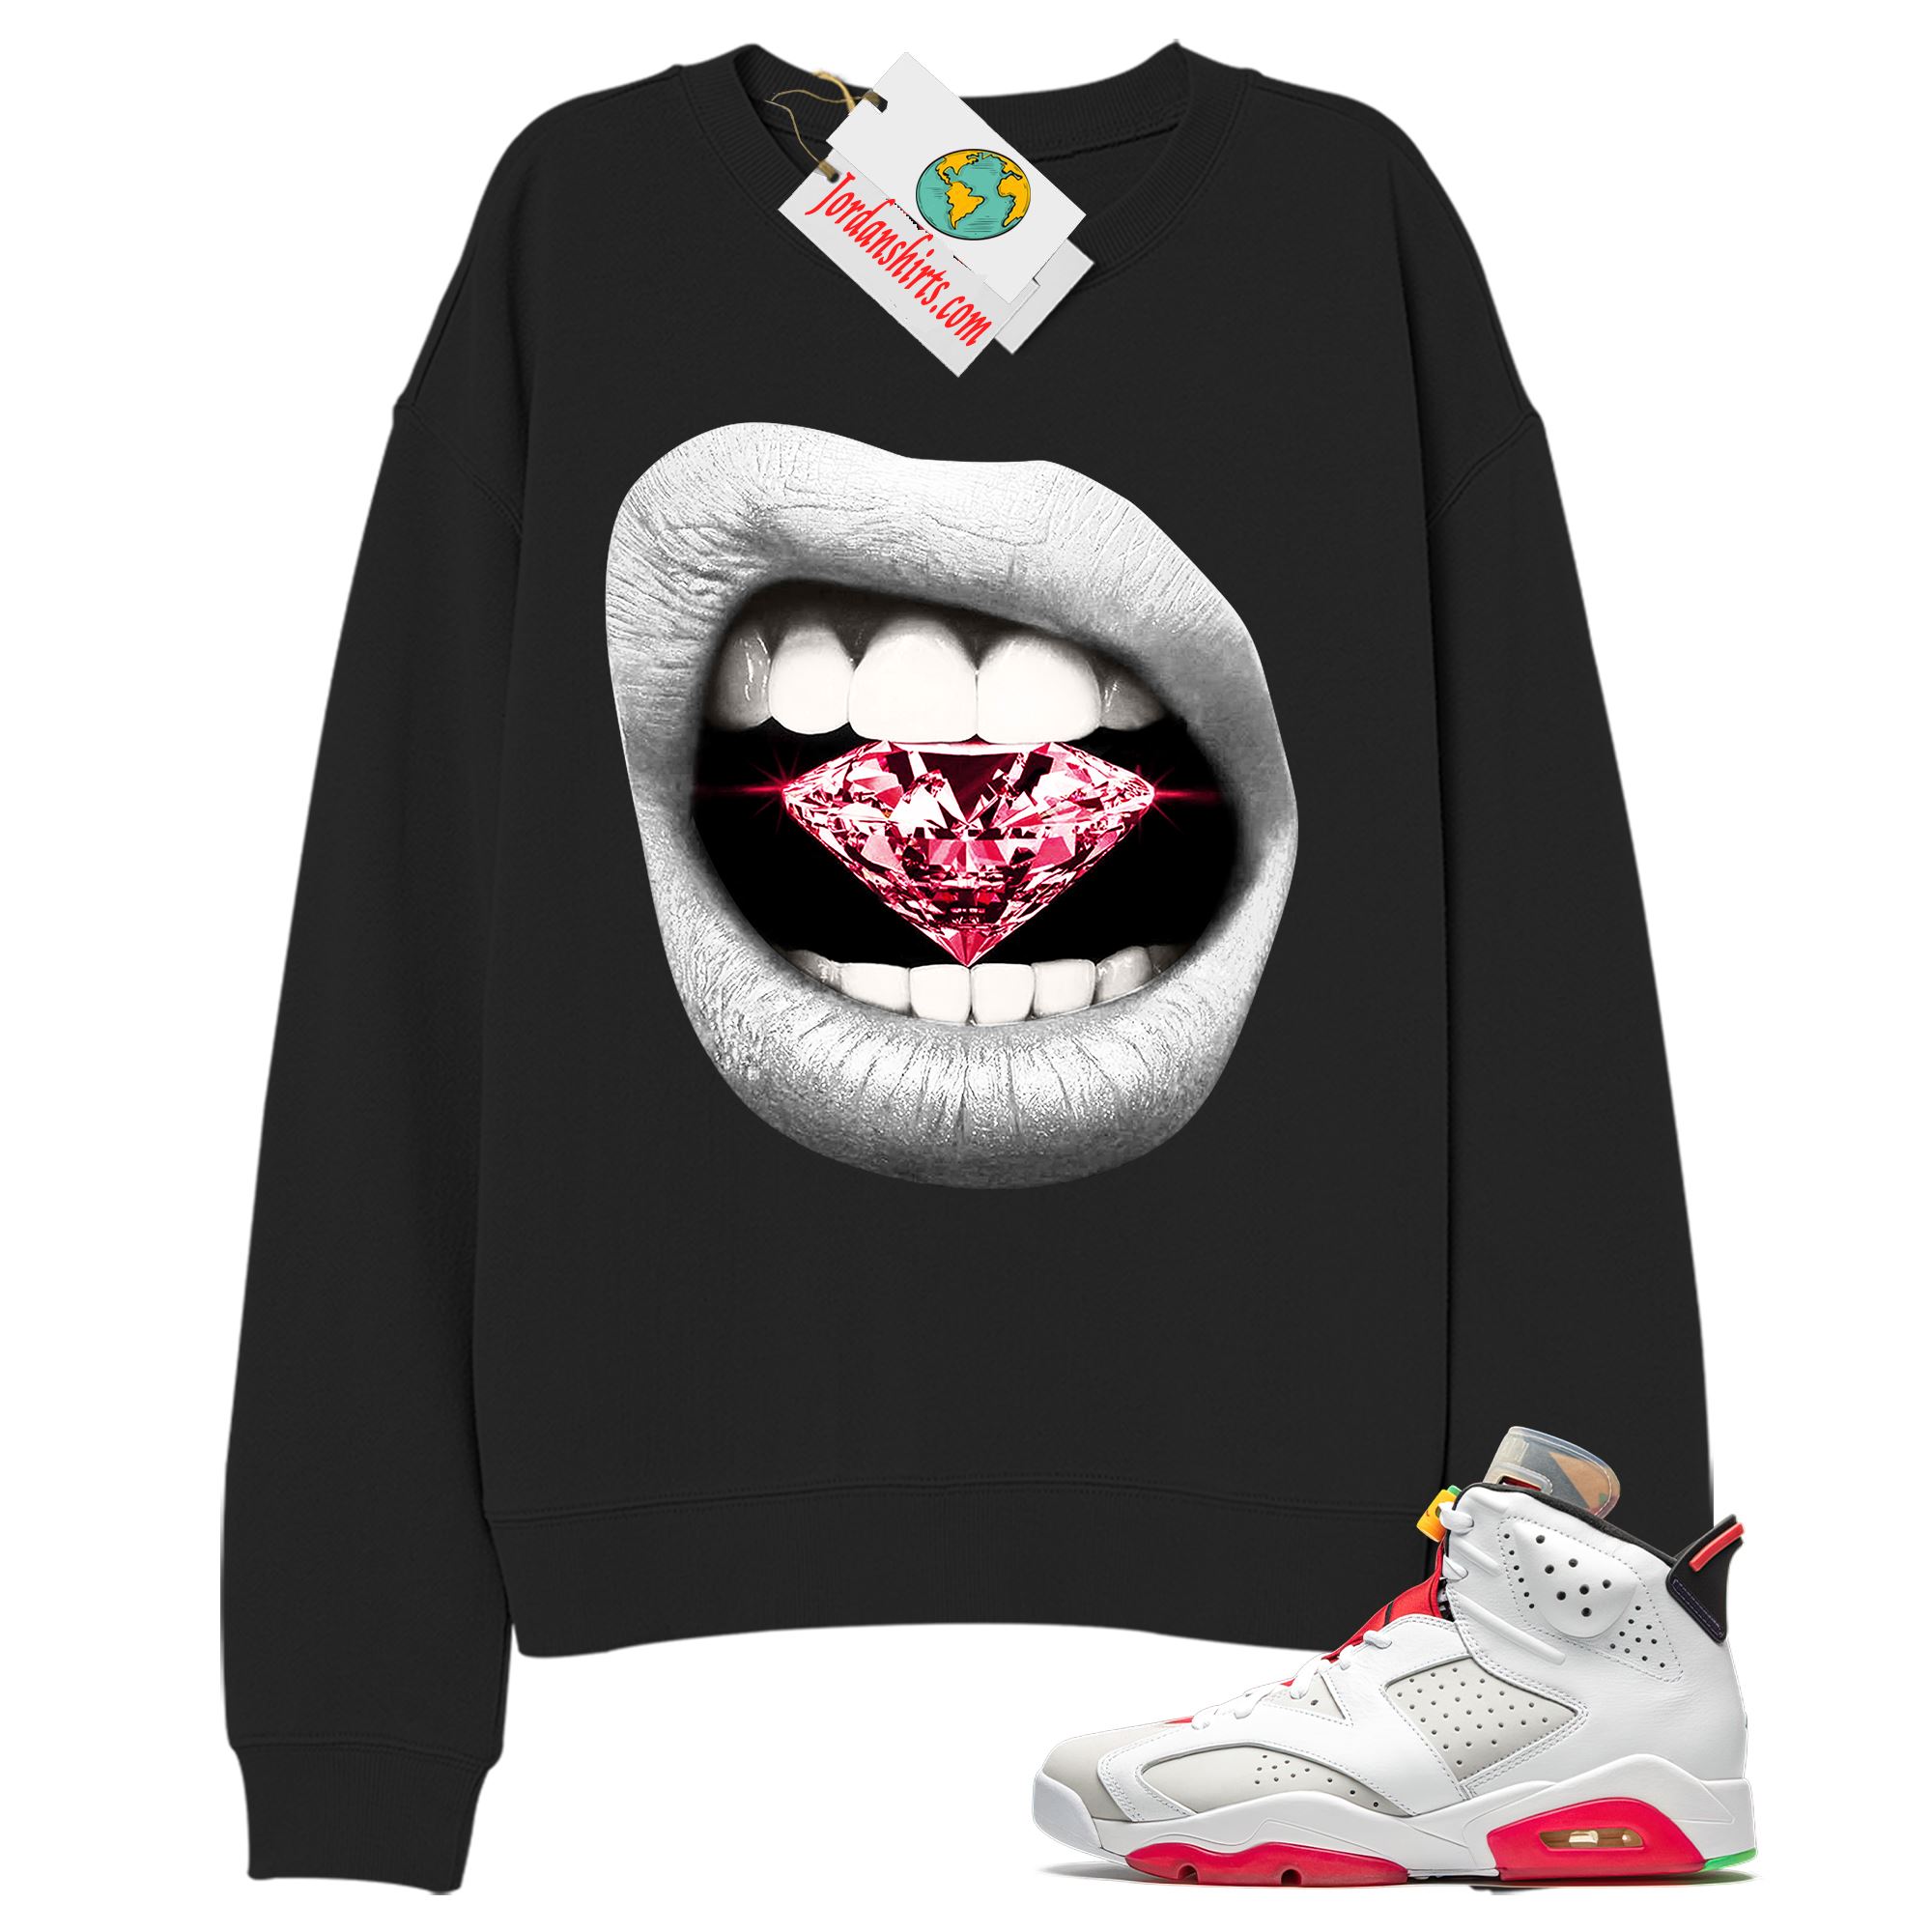 Jordan 6 Sweatshirt, Diamond Lip Black Sweatshirt Air Jordan 6 Hare 6s Full Size Up To 5xl